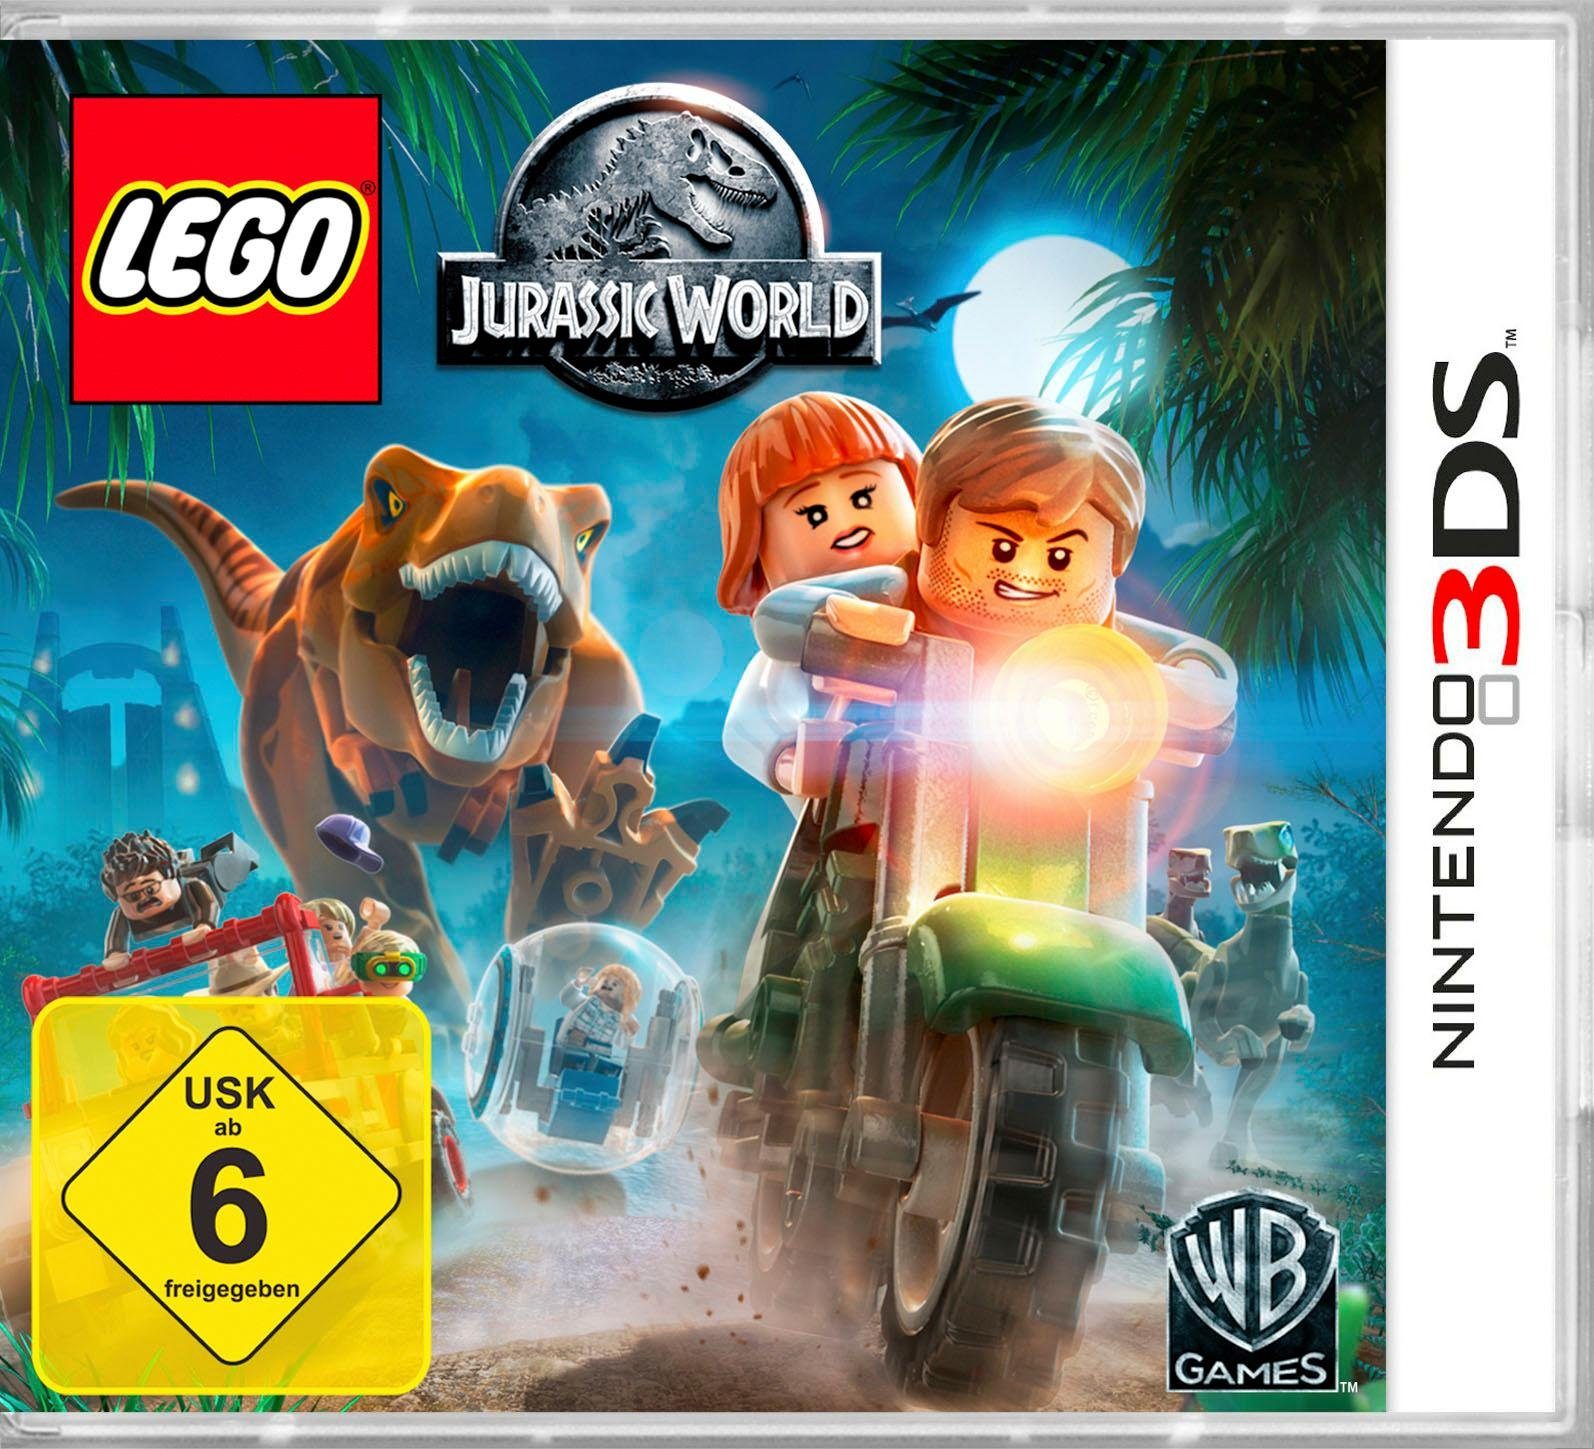 Software Games LEGO World Jurassic Pyramide Nintendo Warner 3DS,